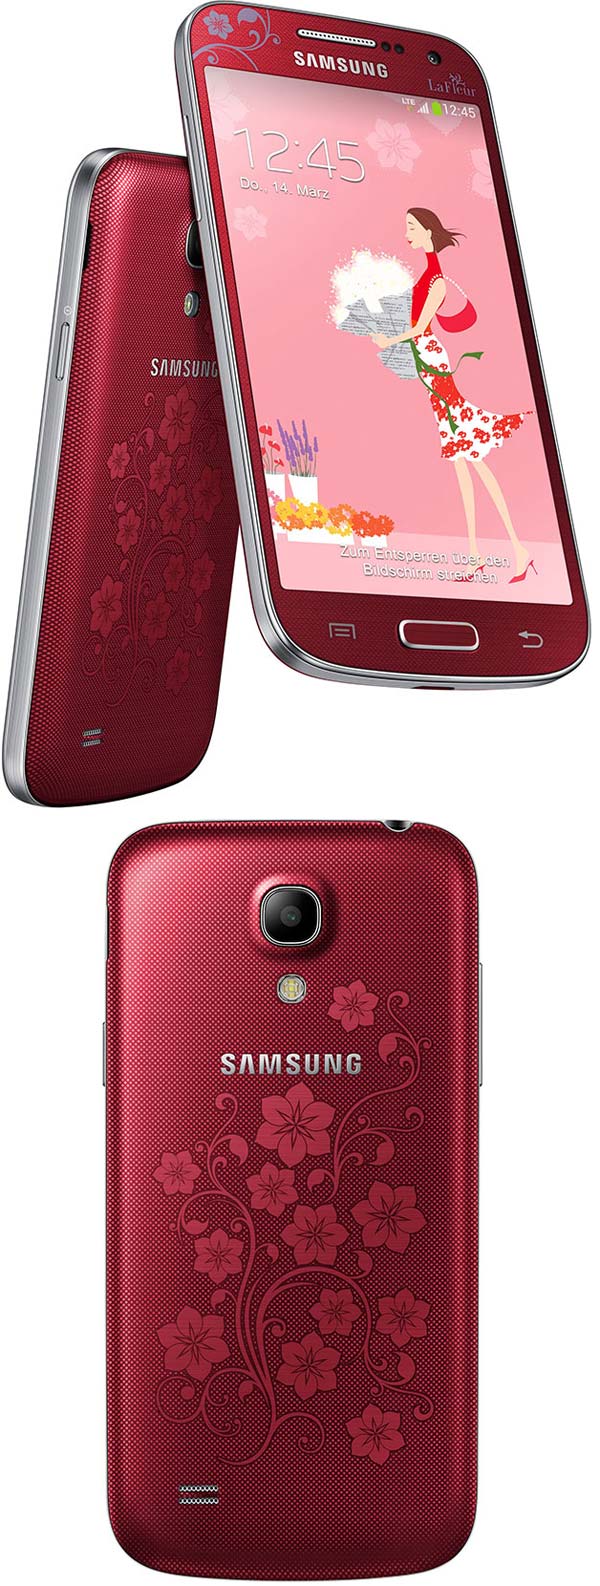 Женский смартфон - Galaxy S4 mini La Fleur Edition от Samsung